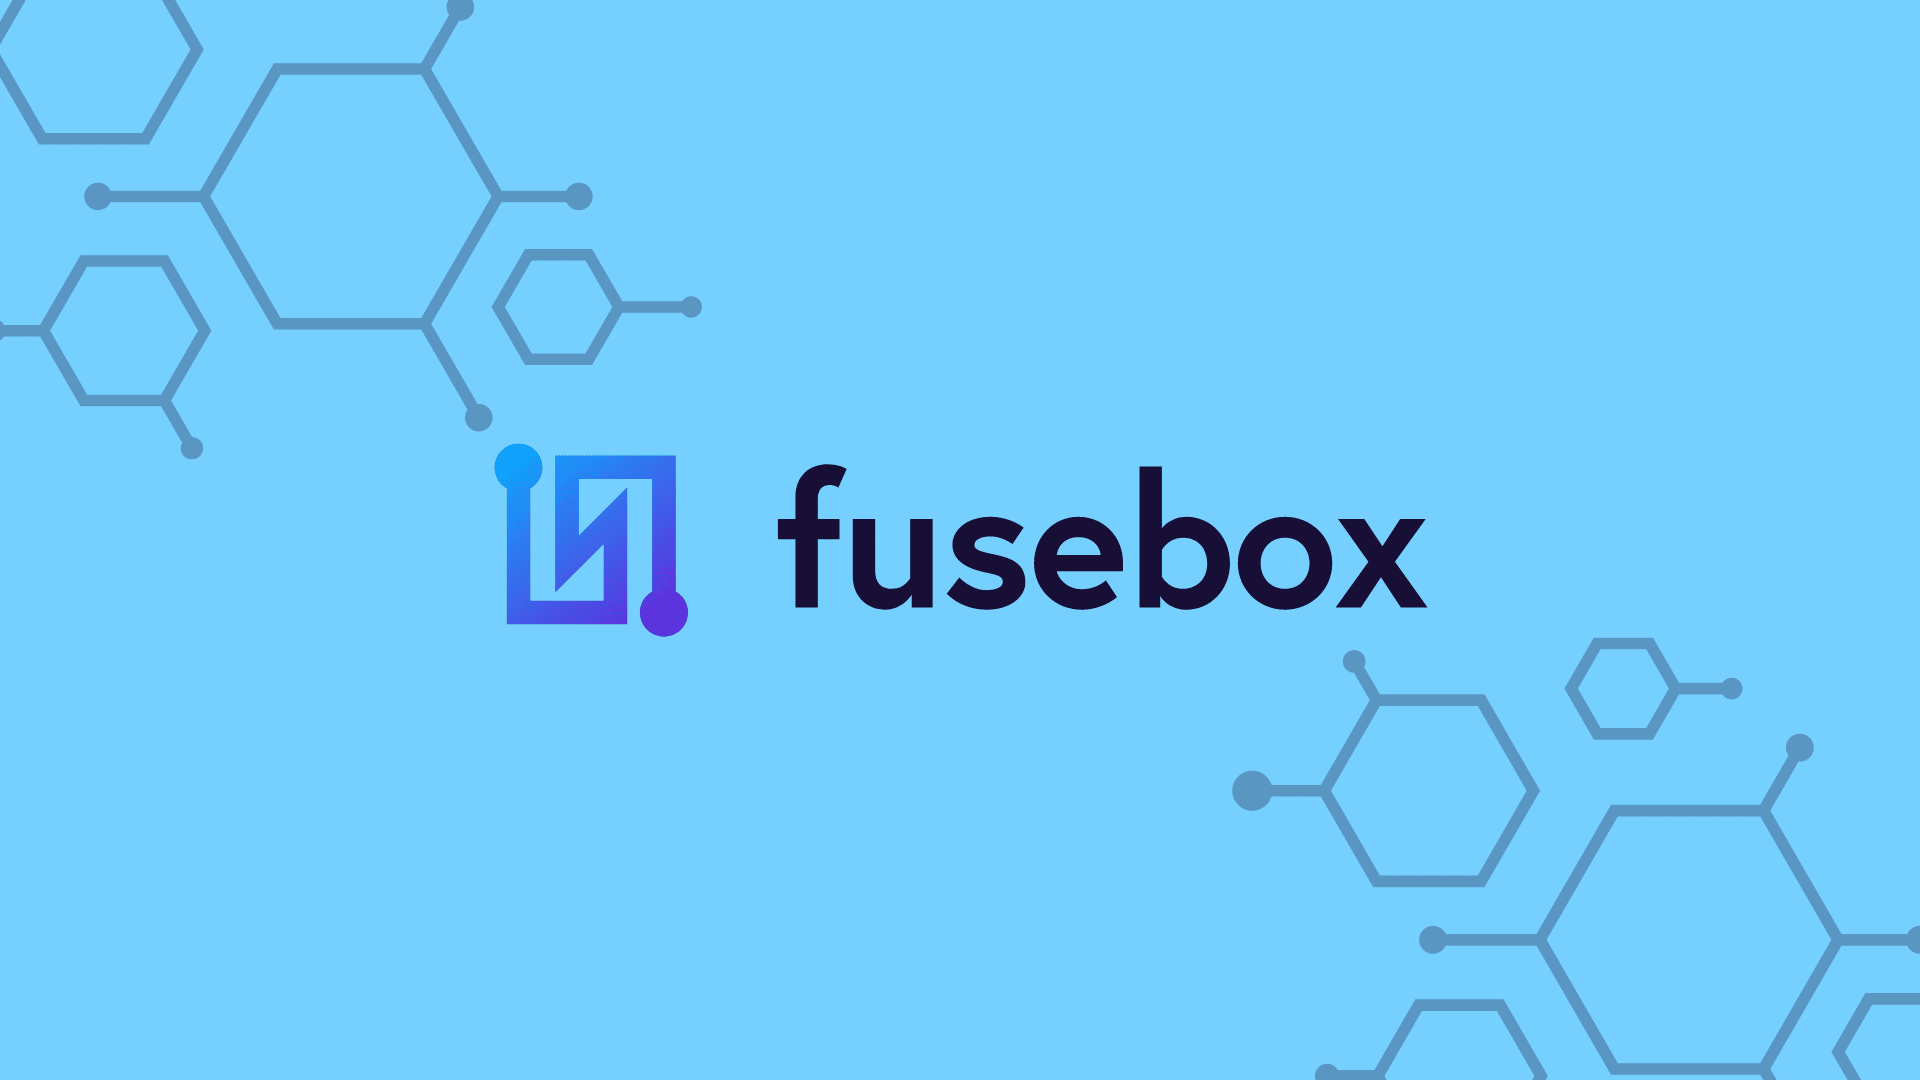 FuseBox Logo